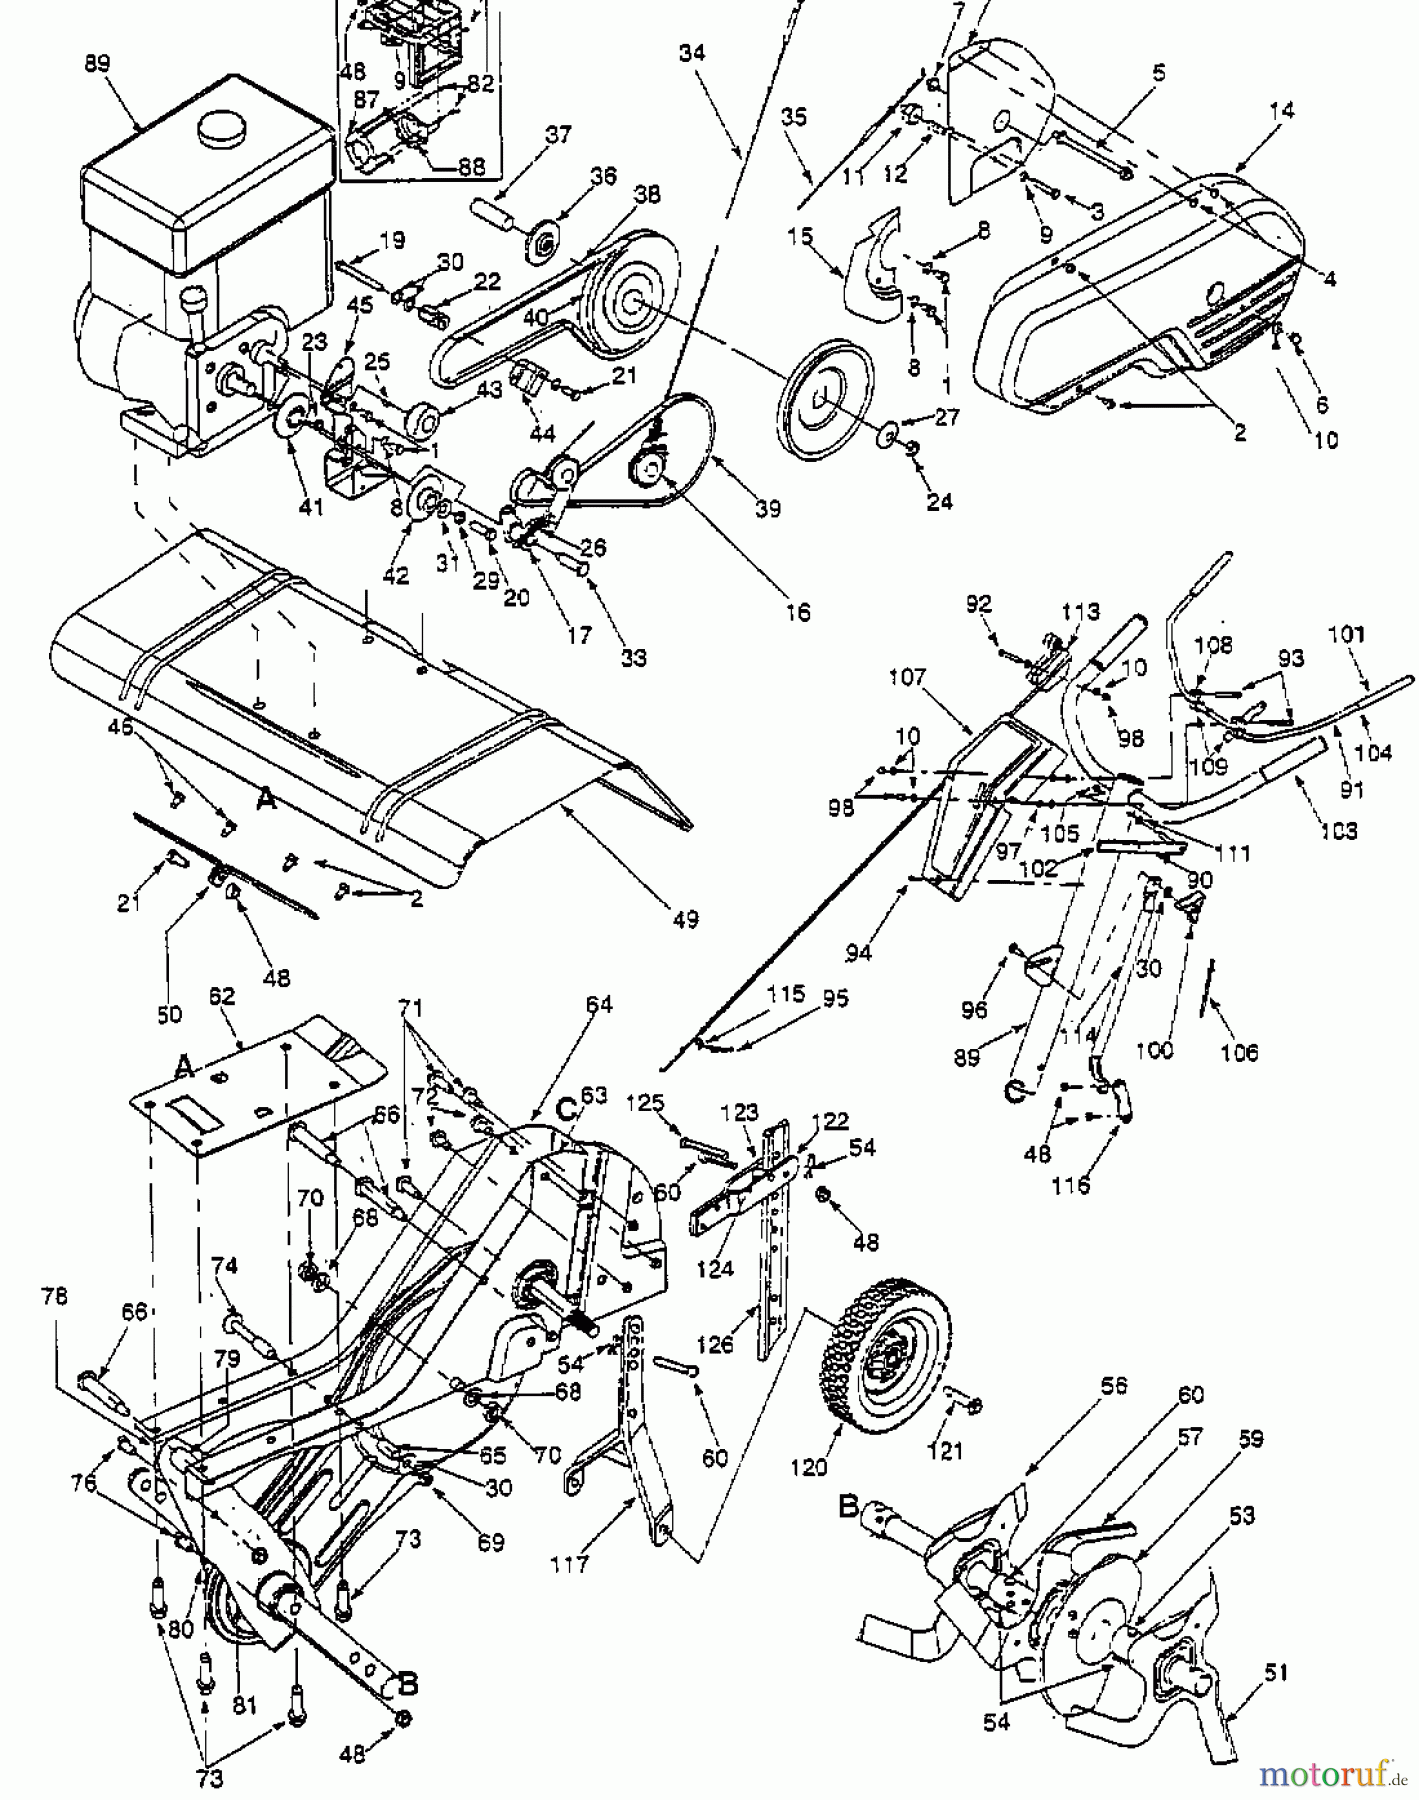  Mastercut Motobineuse T 380/50 21A-380-659  (2000) Machine de base